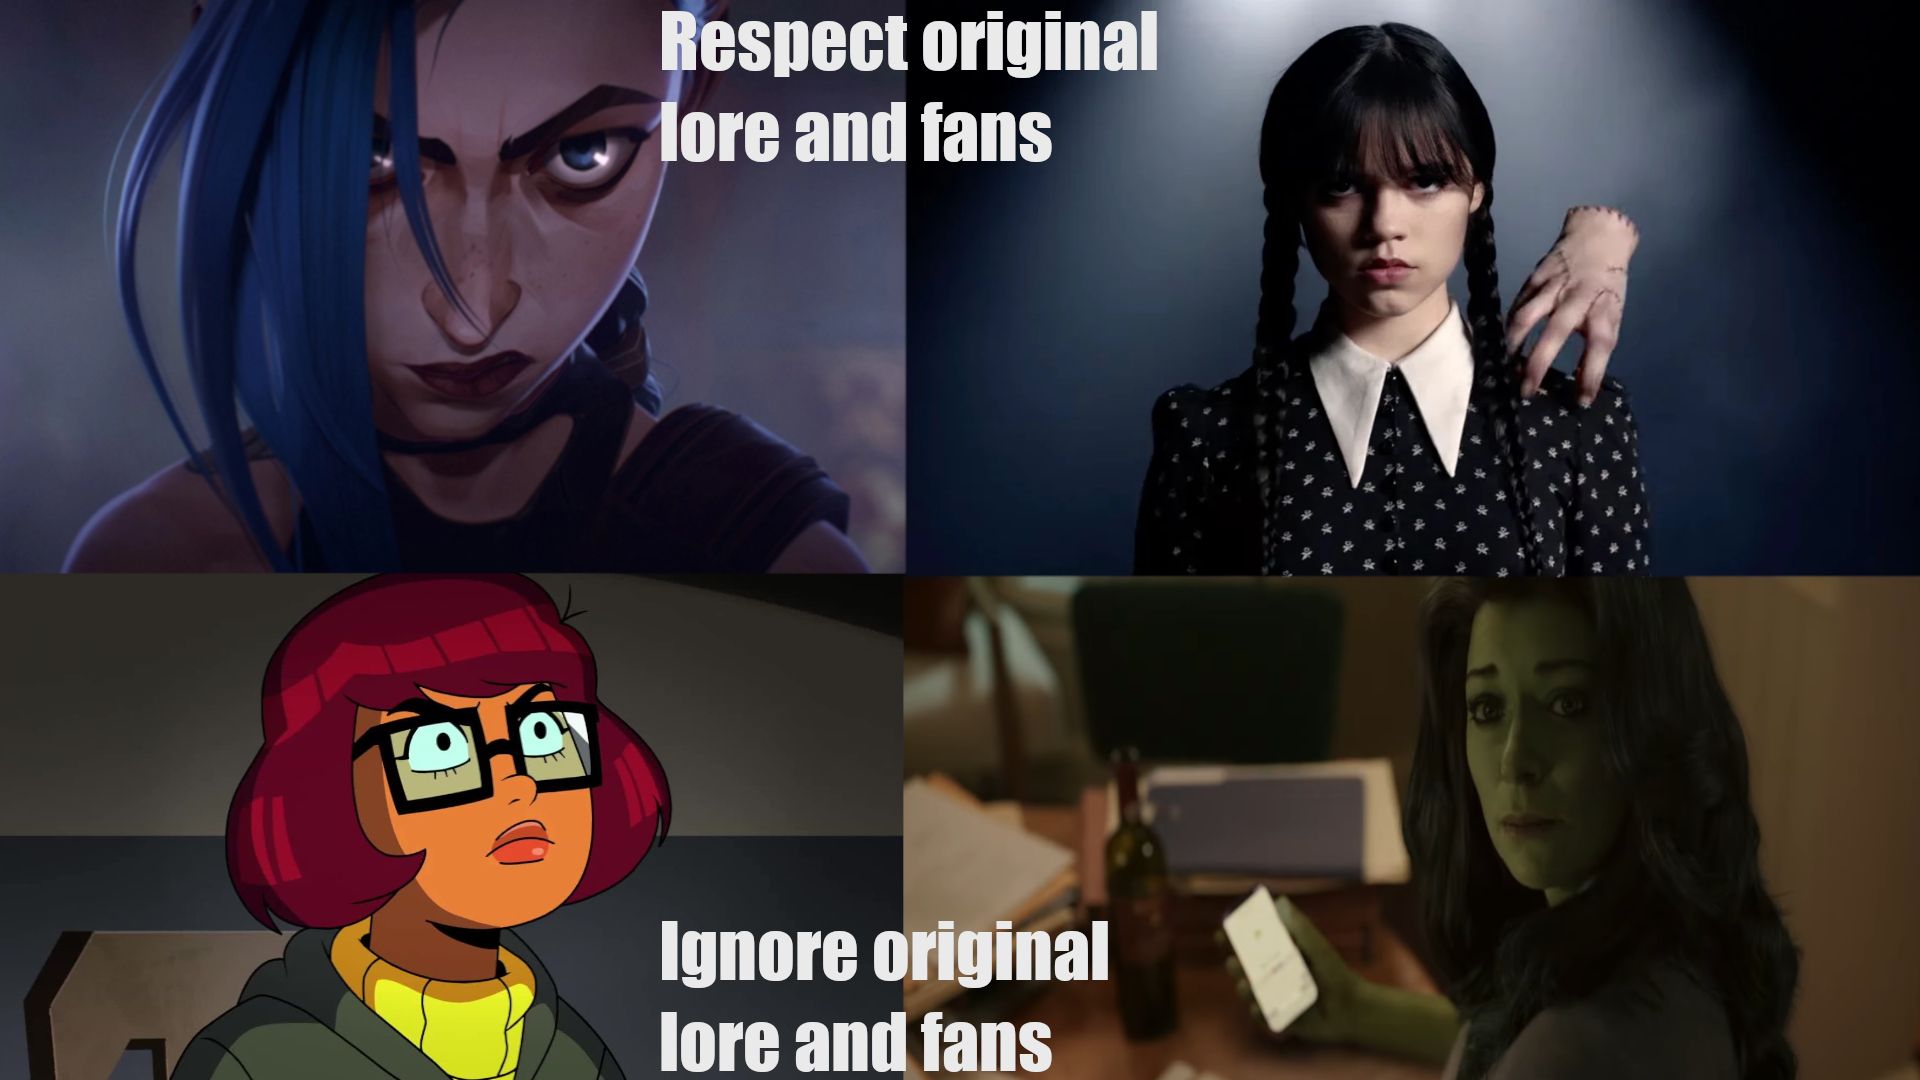 Respect original lore and fans VS Ignore original lore and fans